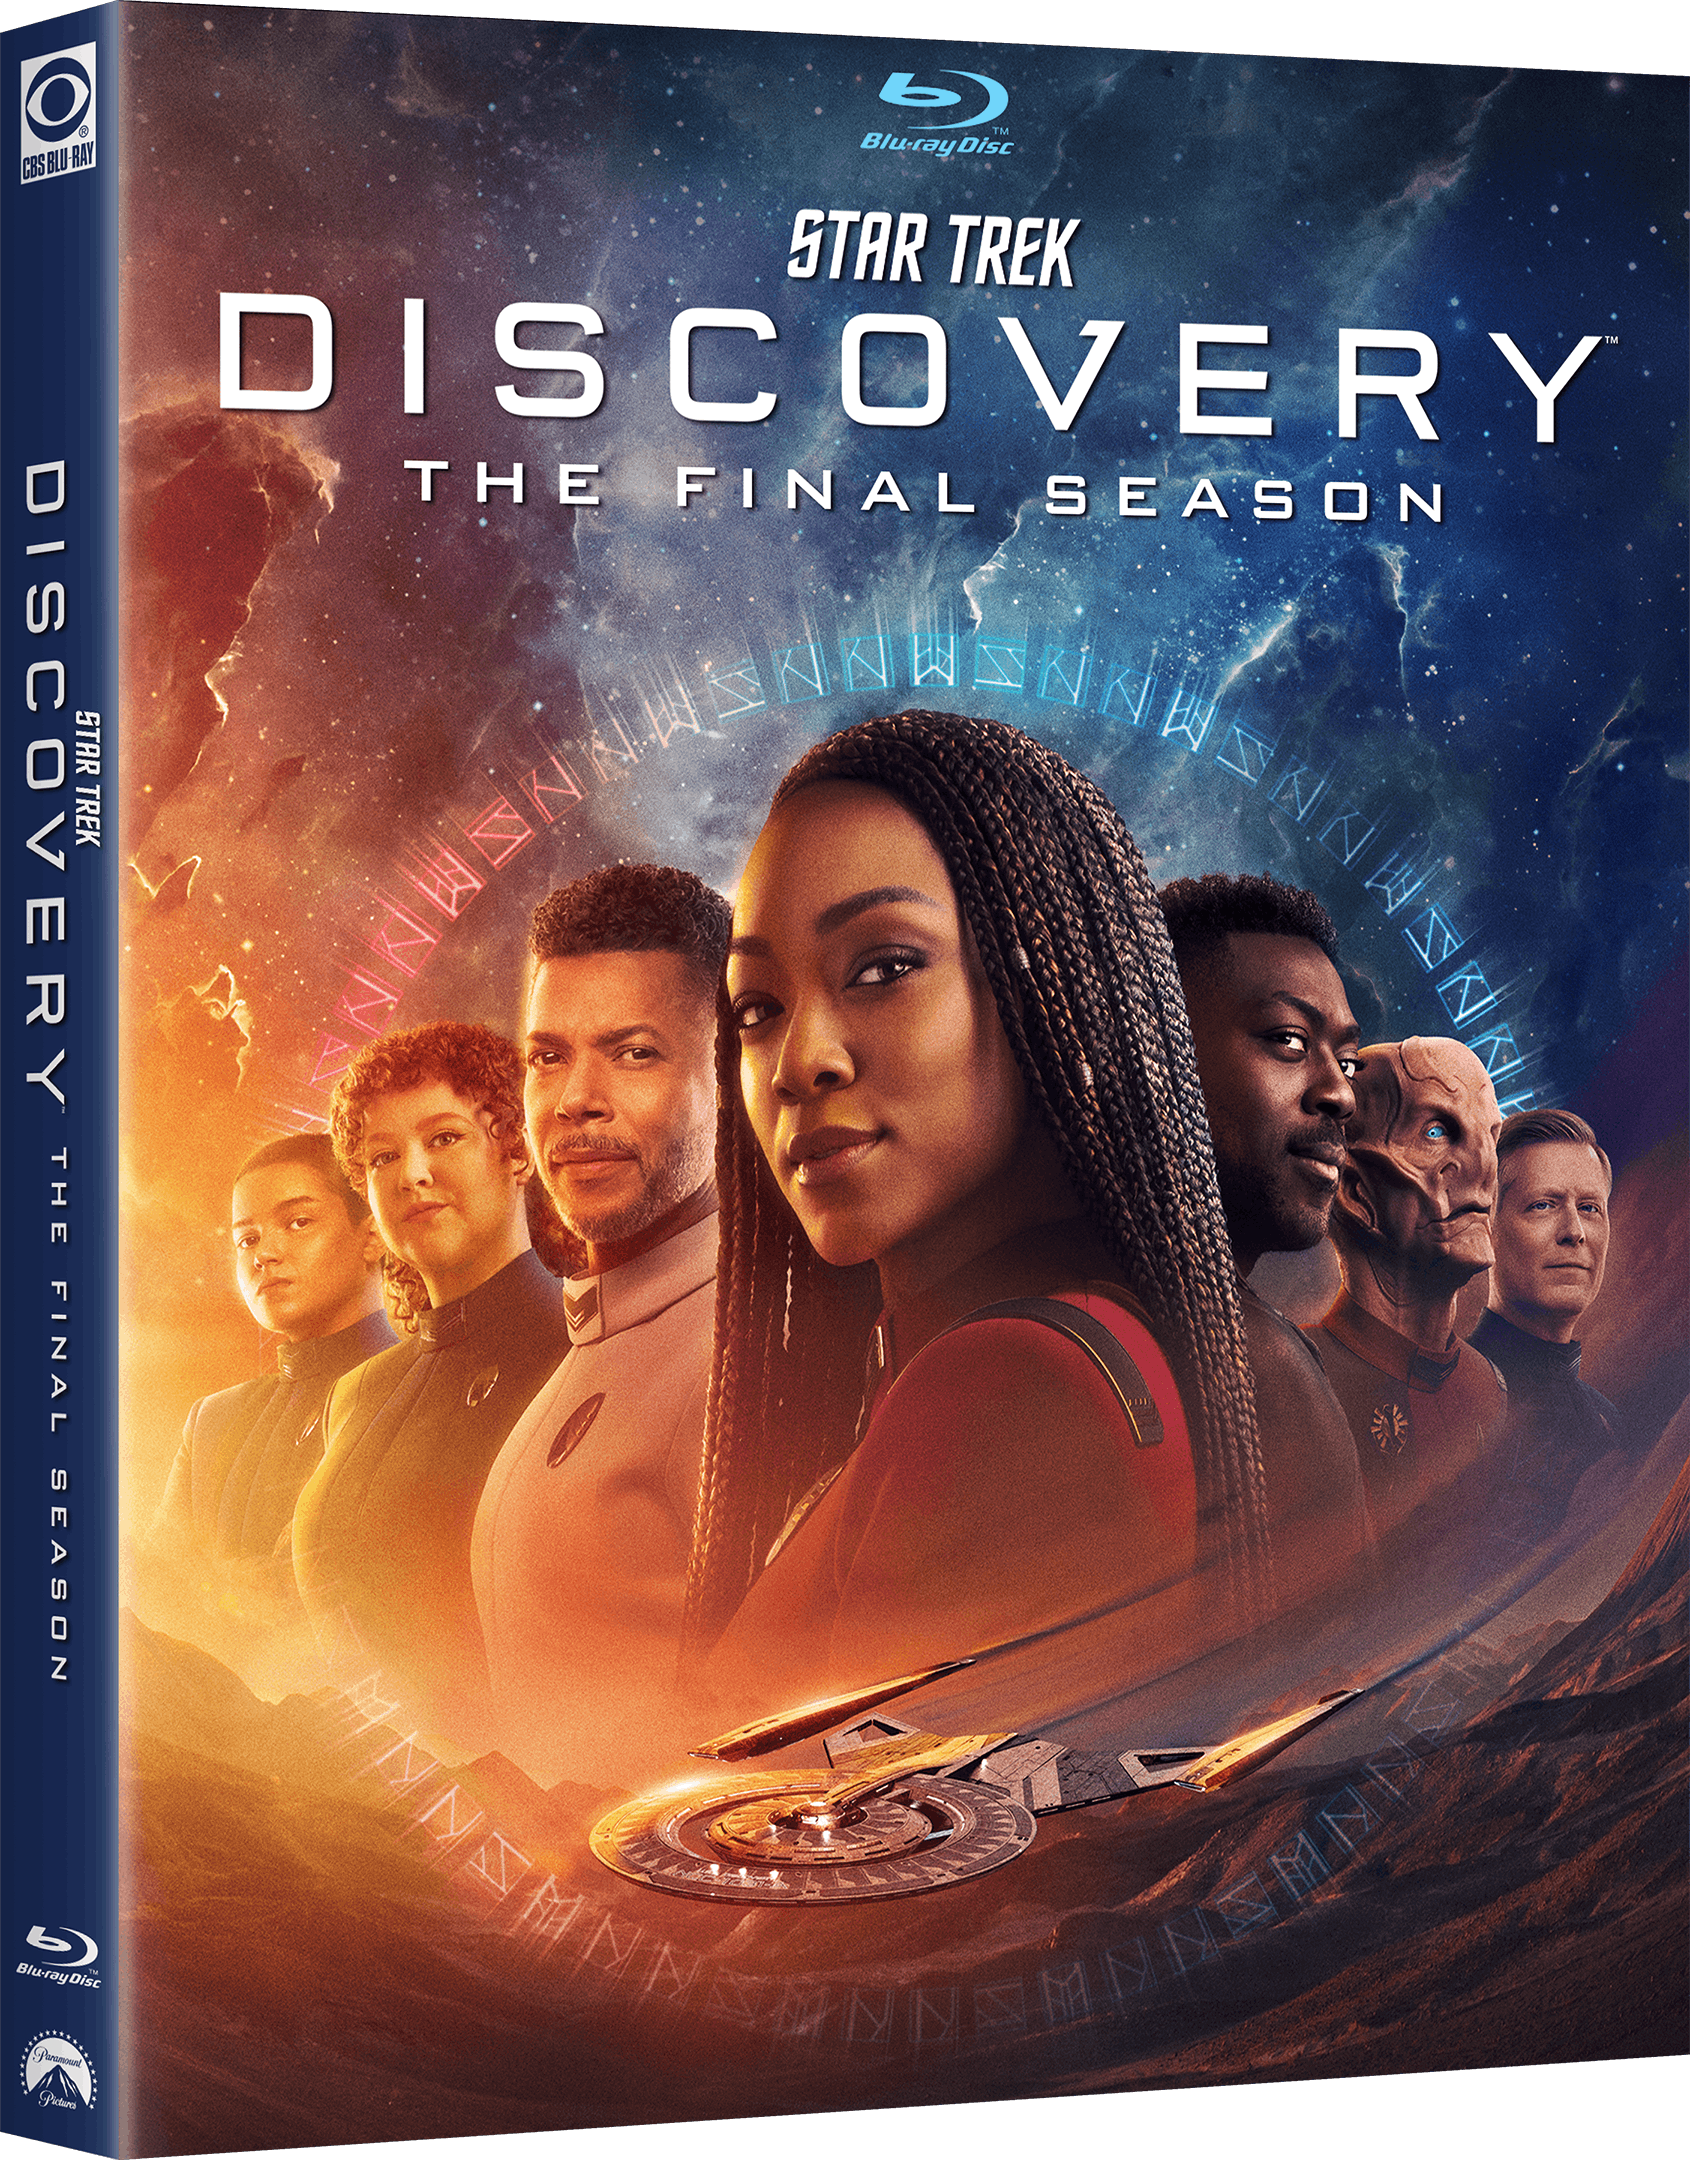 Star Trek: Discovery The Final Season Blu-ray packshot